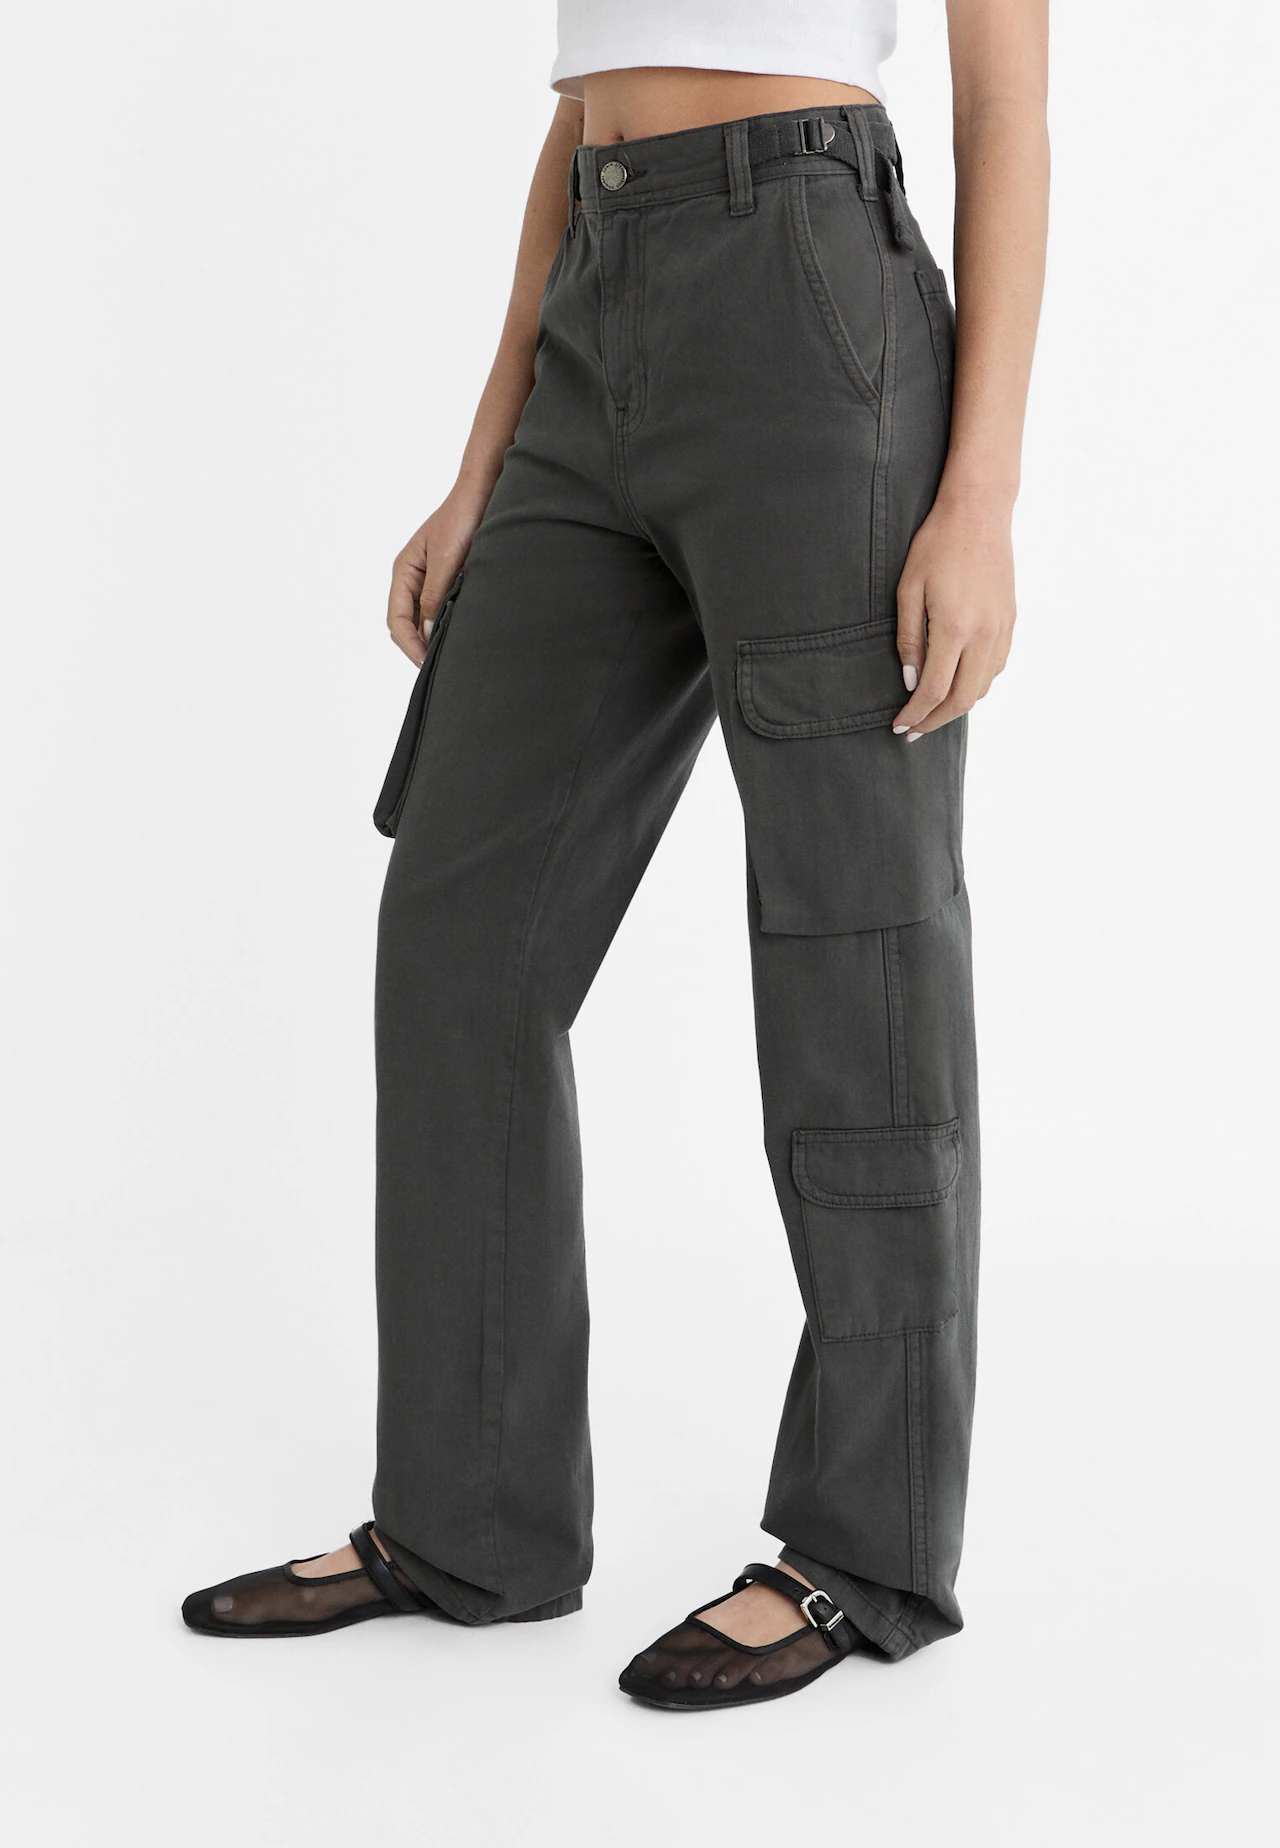 Adjustable waist cargo trousers